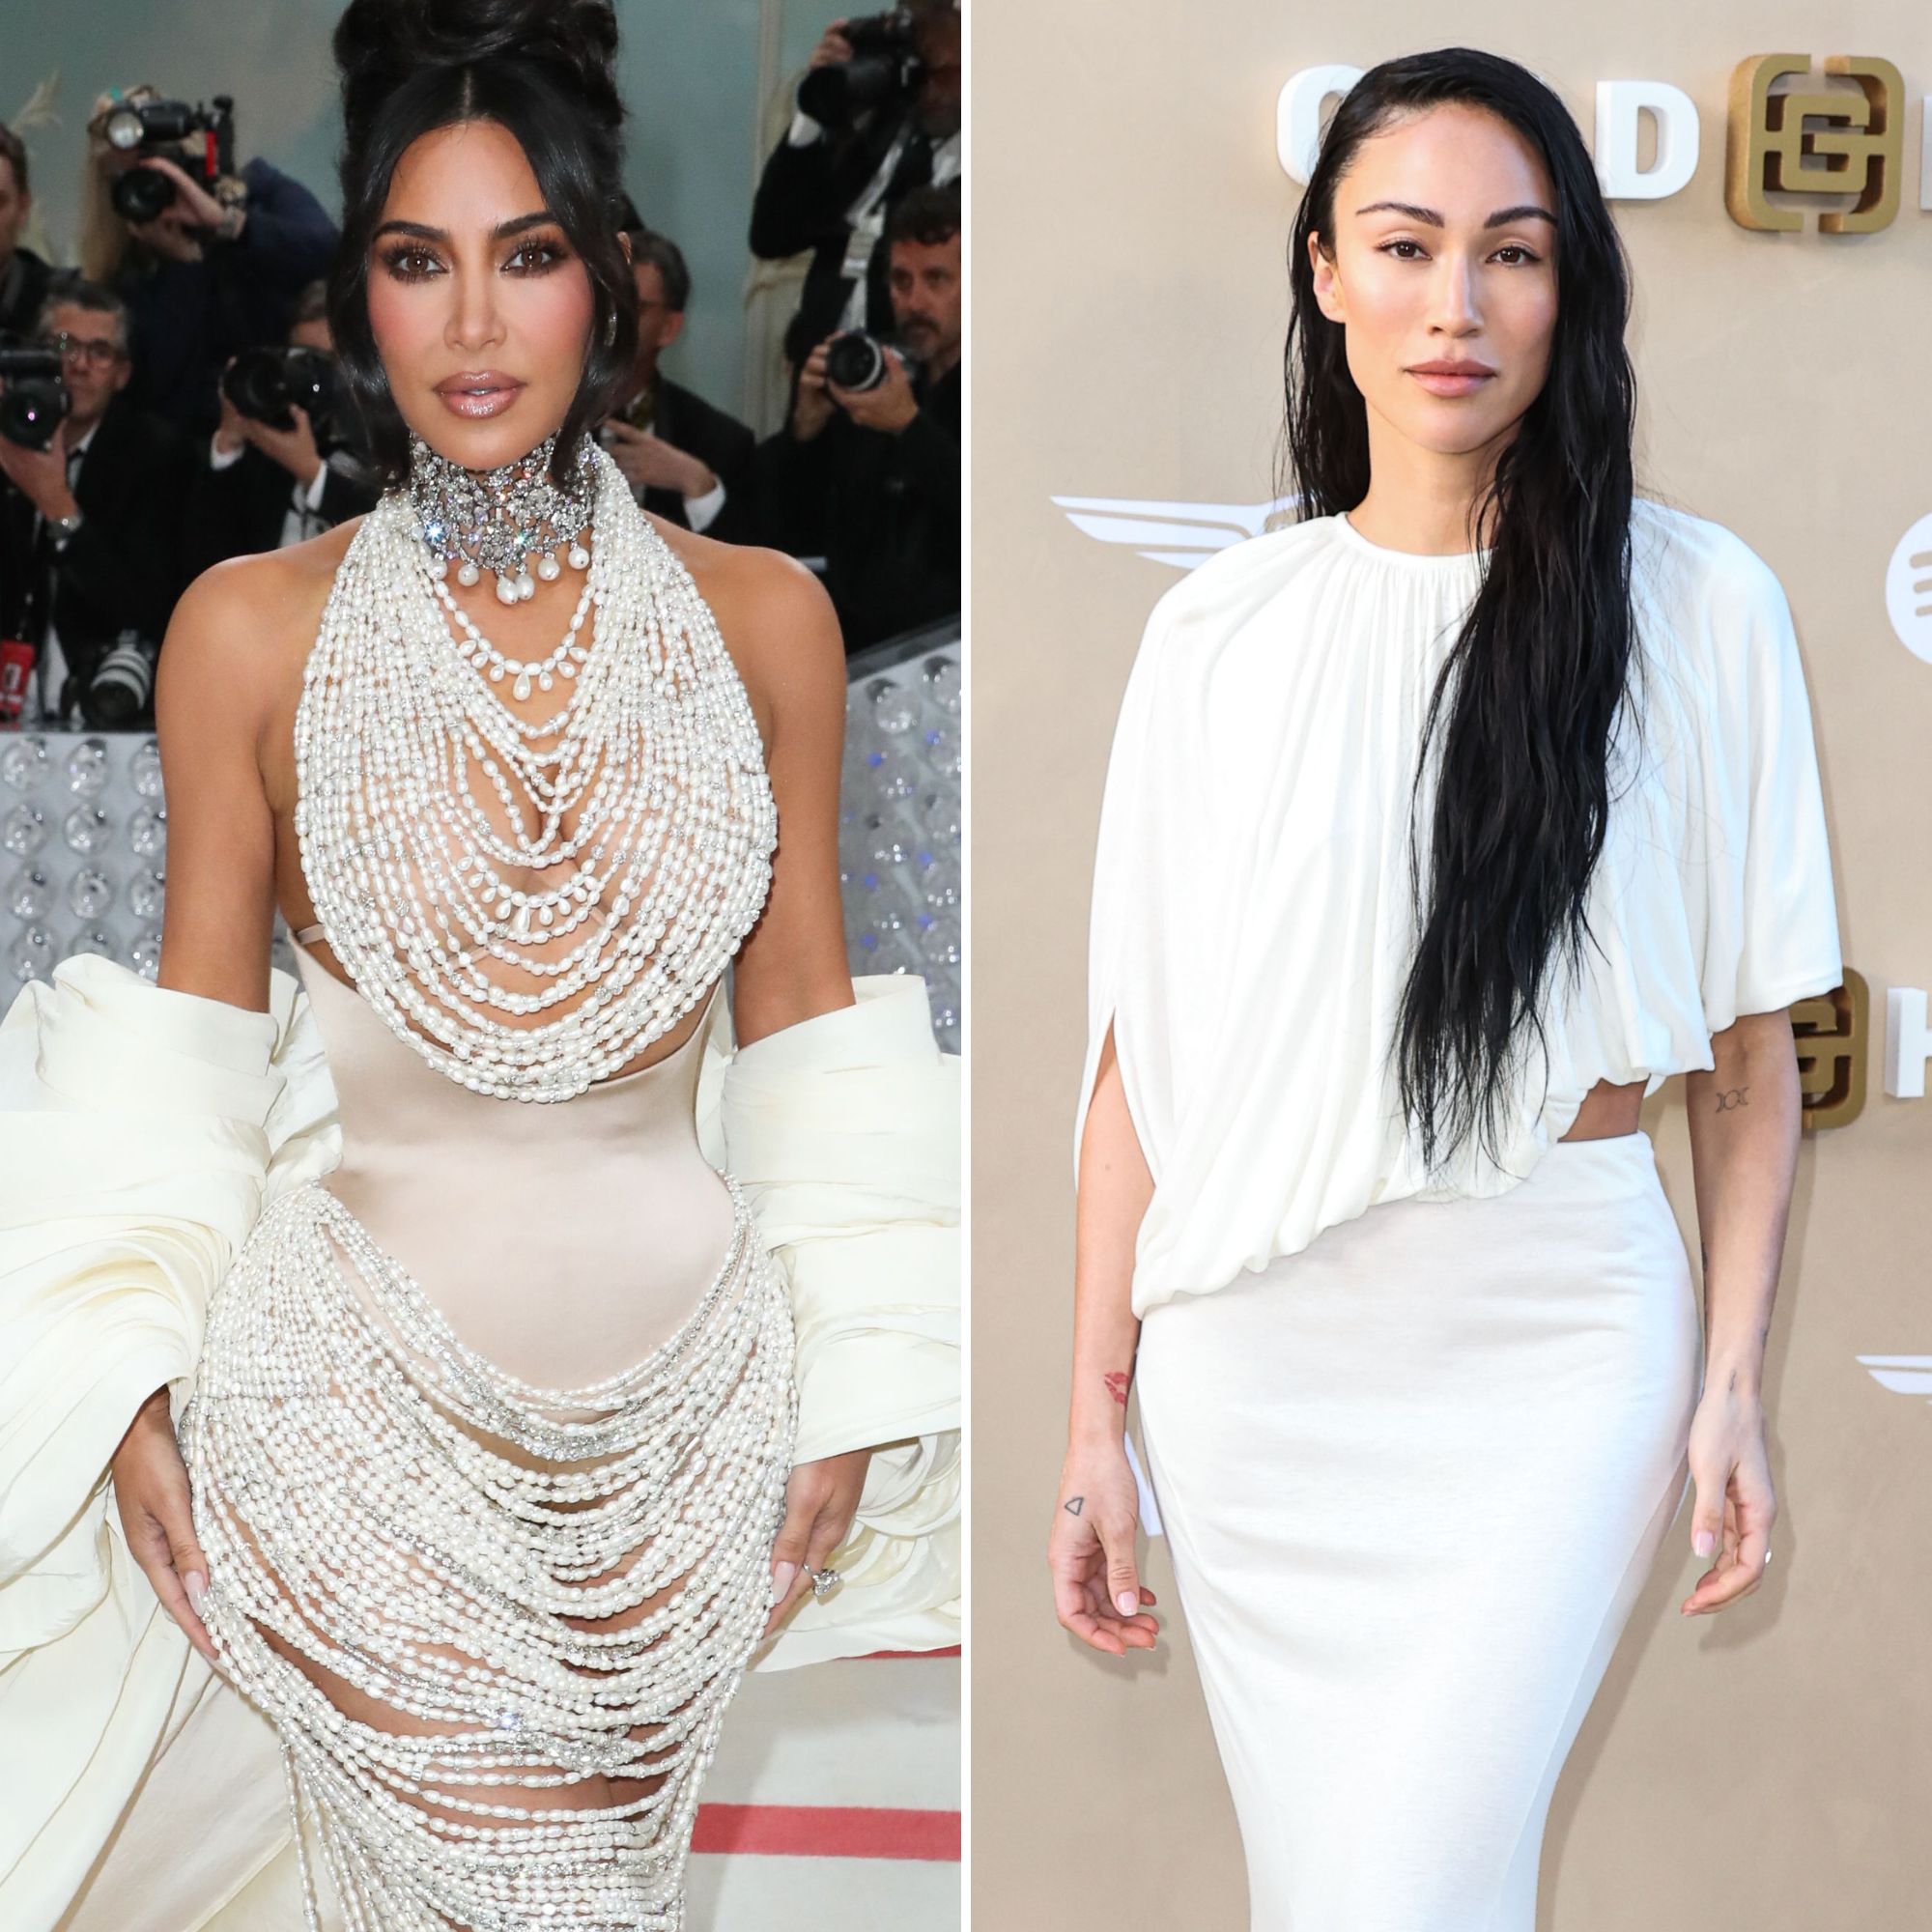 Who Is Steph Shep? Kim Kardashian's Former Assistant